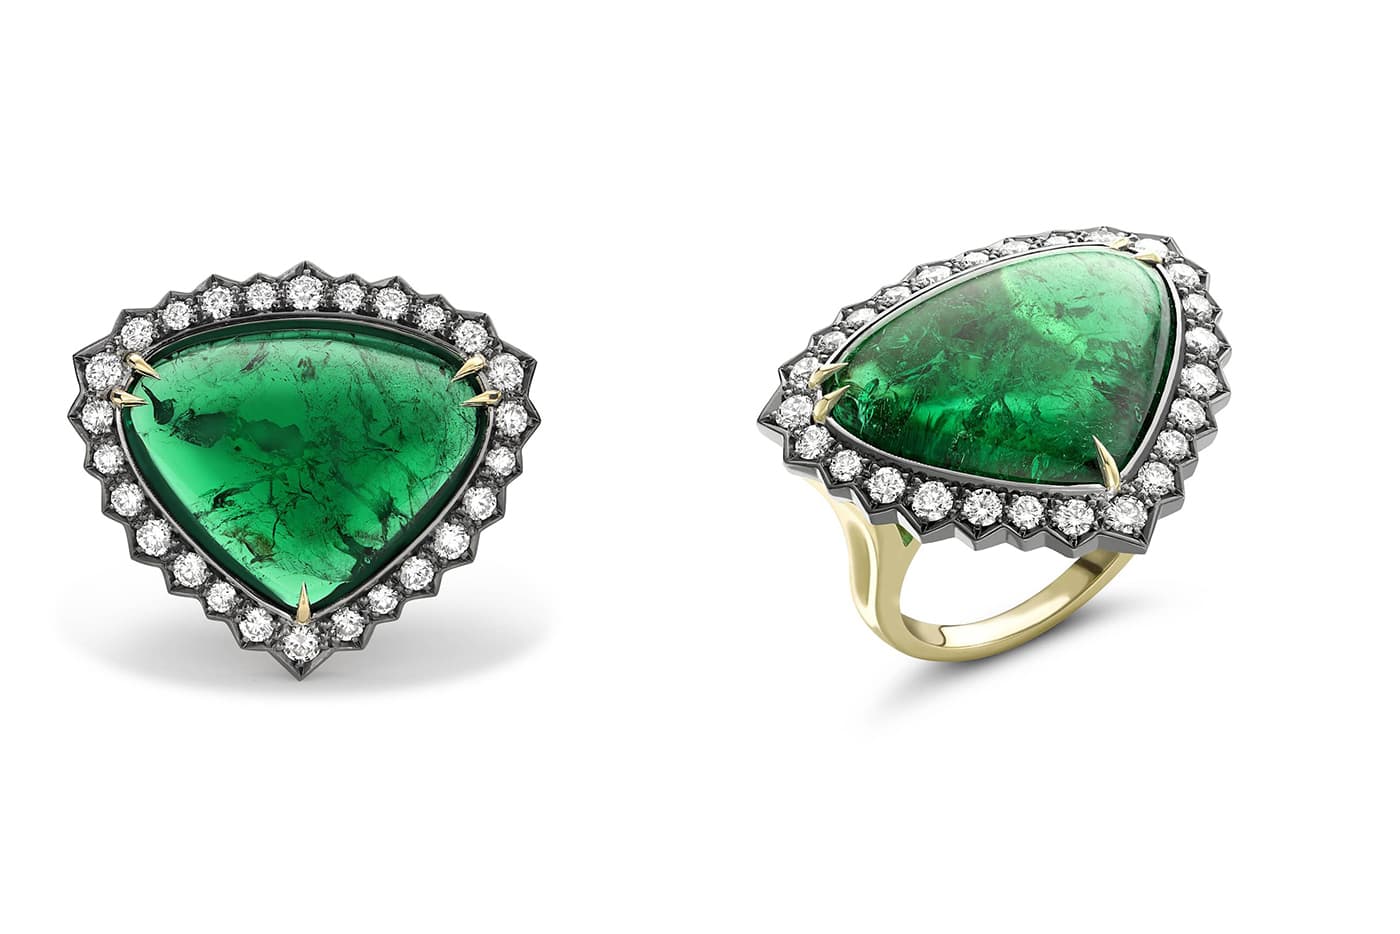 Atelier Pino Spitaleri Boom ring with a Zambian emerald and diamonds 